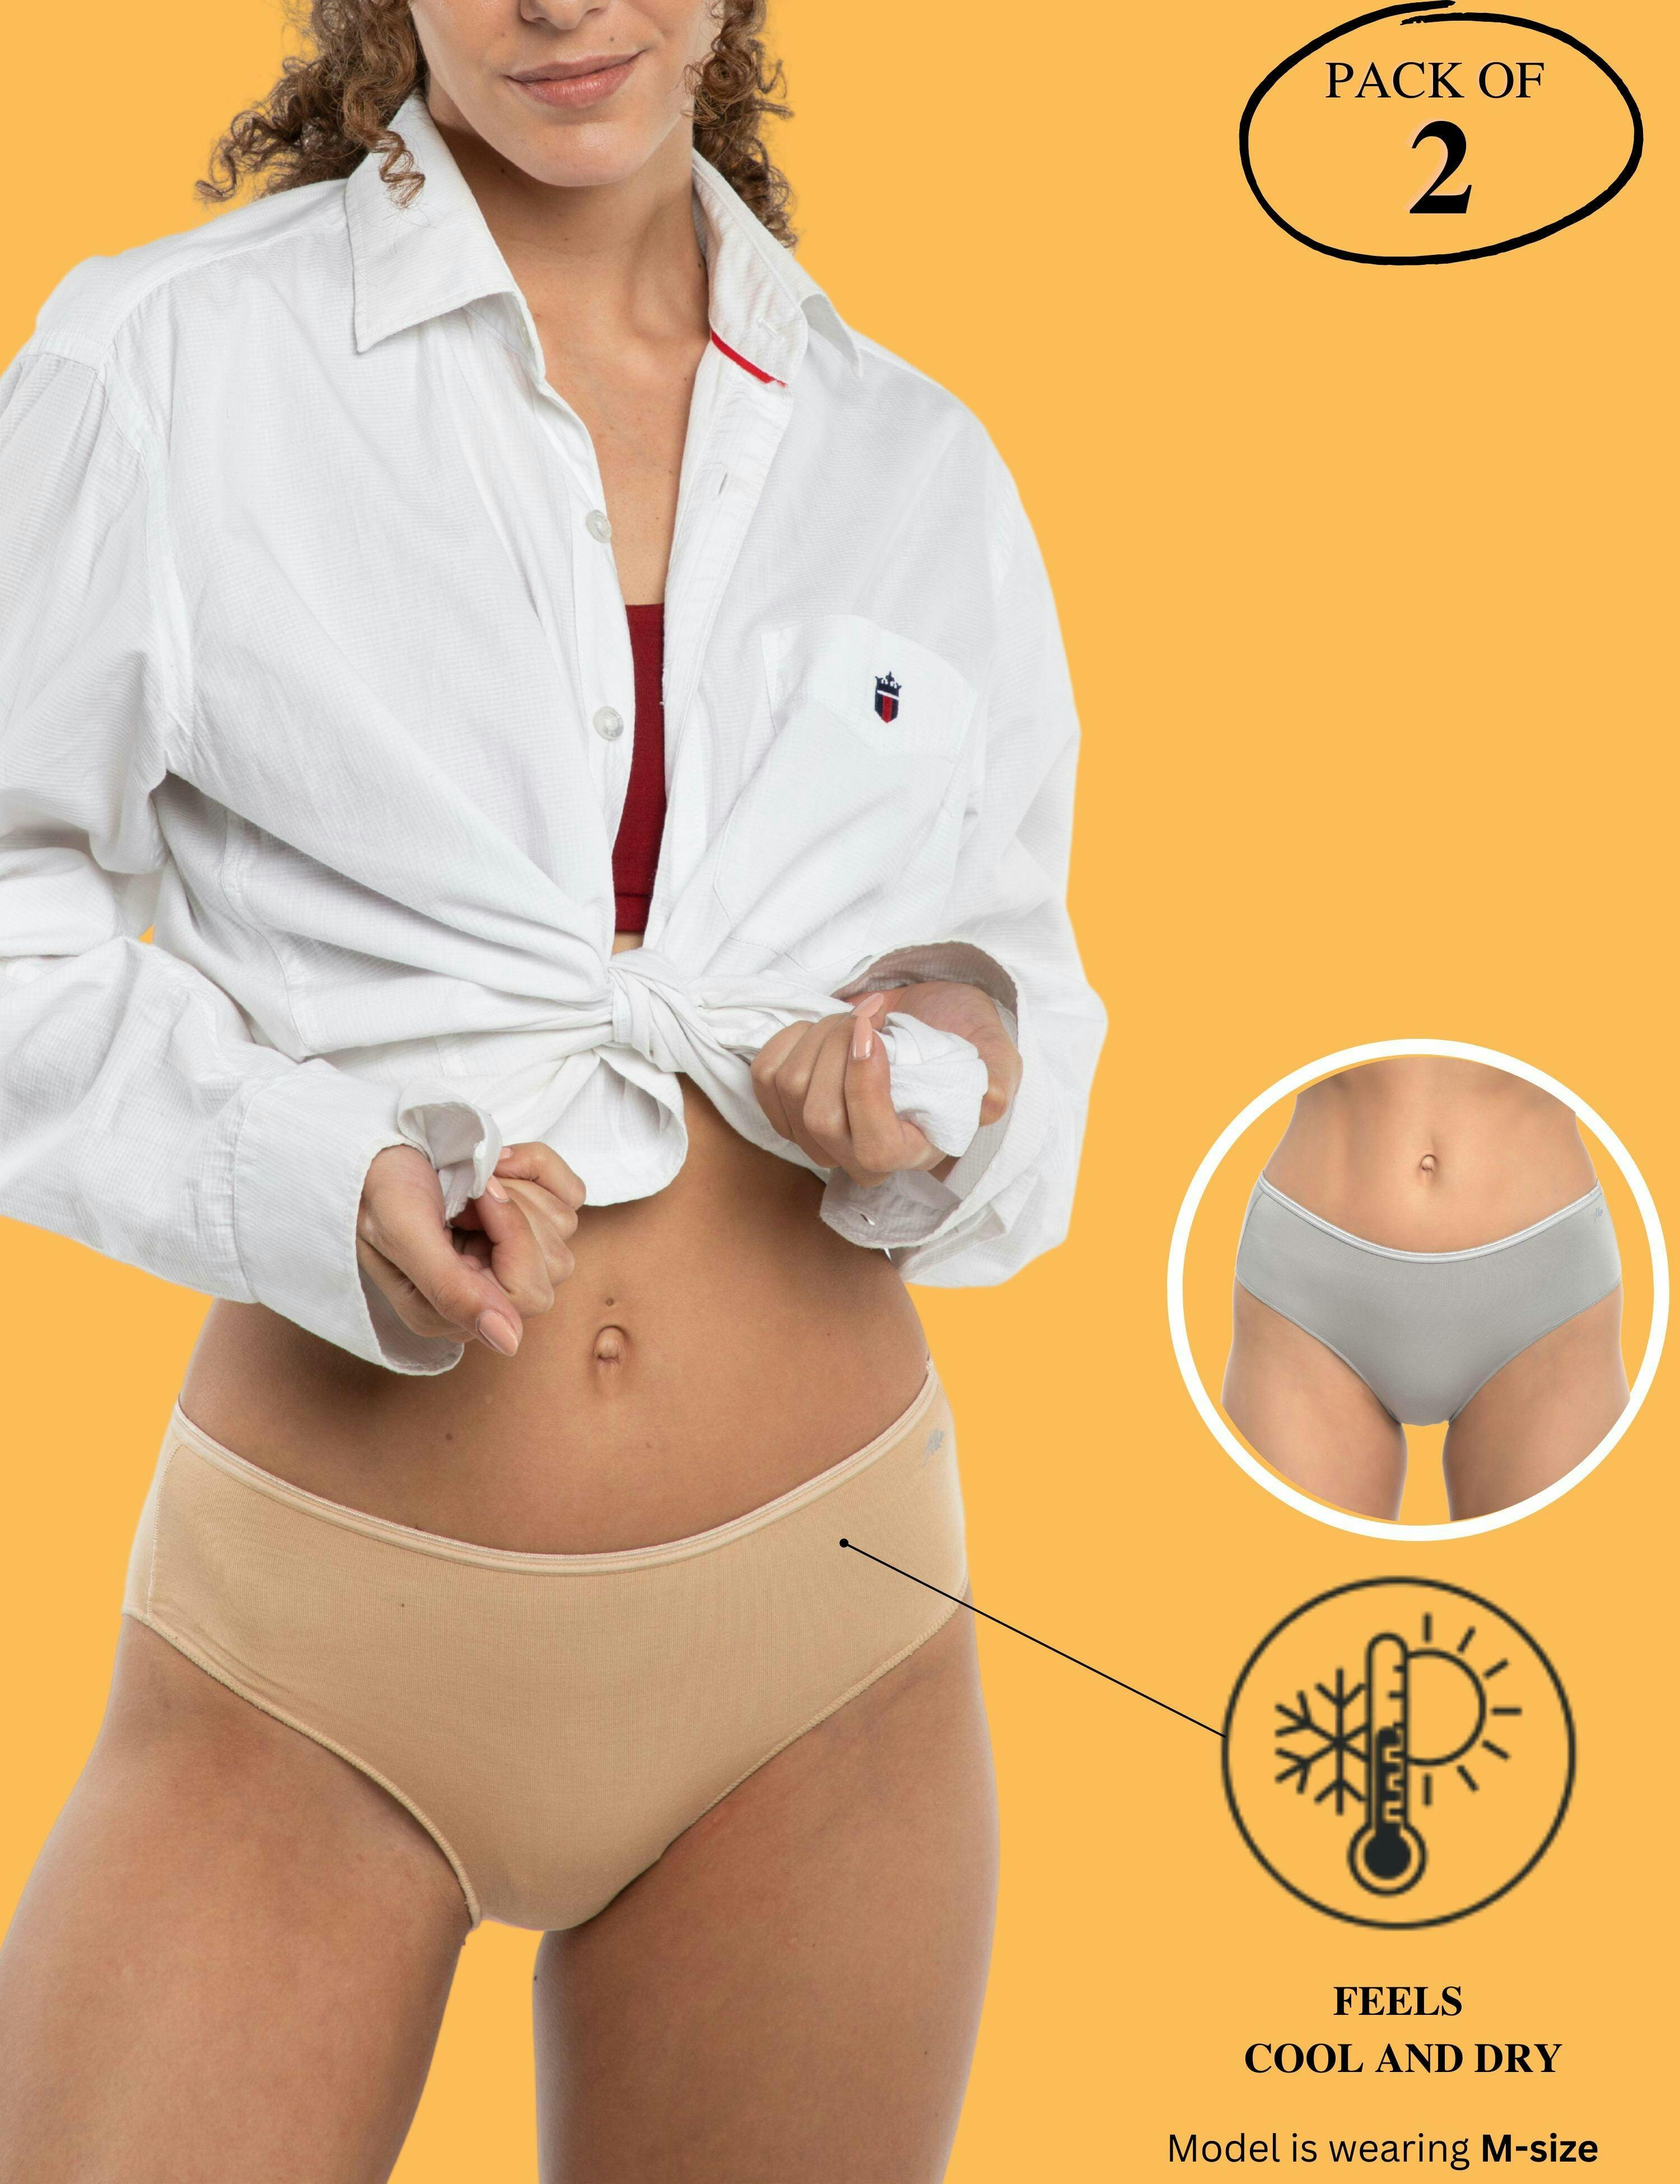 How AshleyandAlvis Is Taking Over the Women's & Men's Underwear